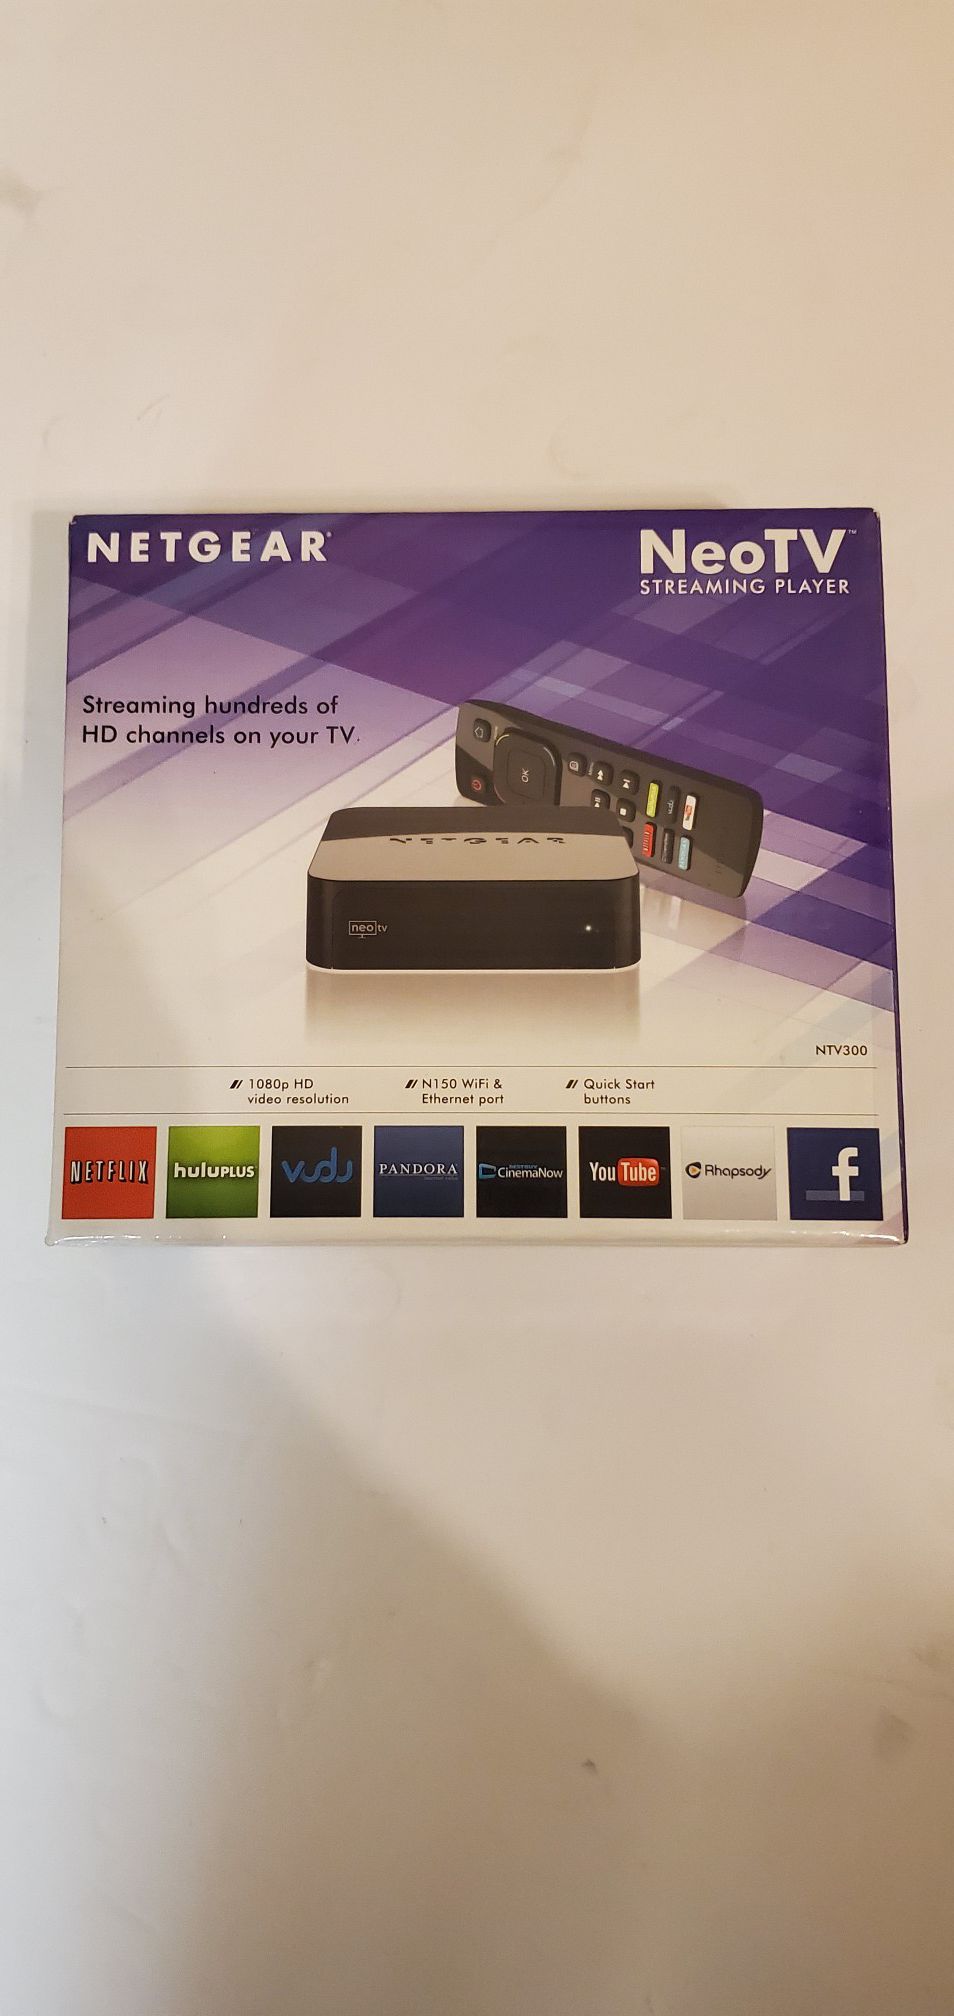 NeoTV streaming player